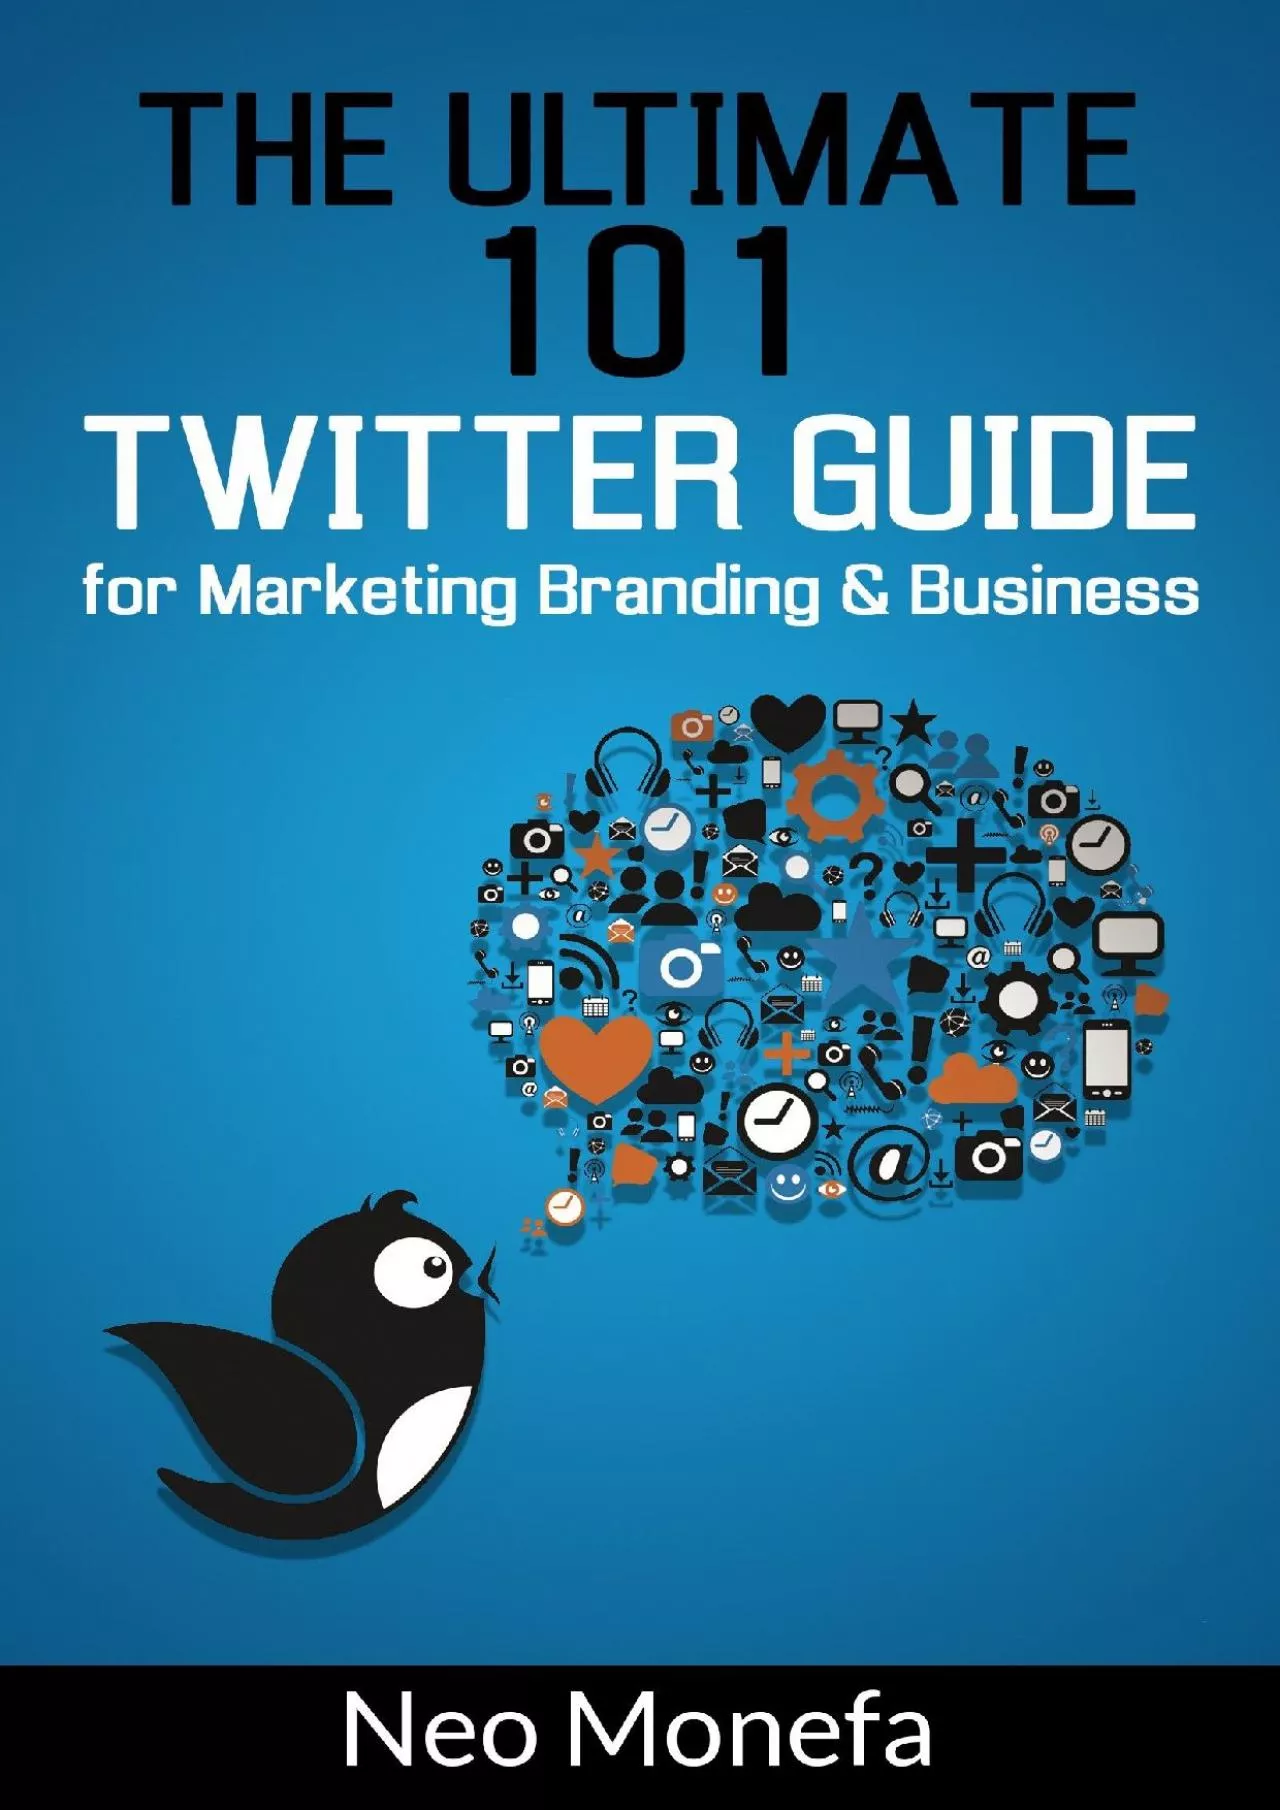 TWITTER: The Ultimate 101 Twitter Guide for Marketing Branding & Business (Twitter Marketing-